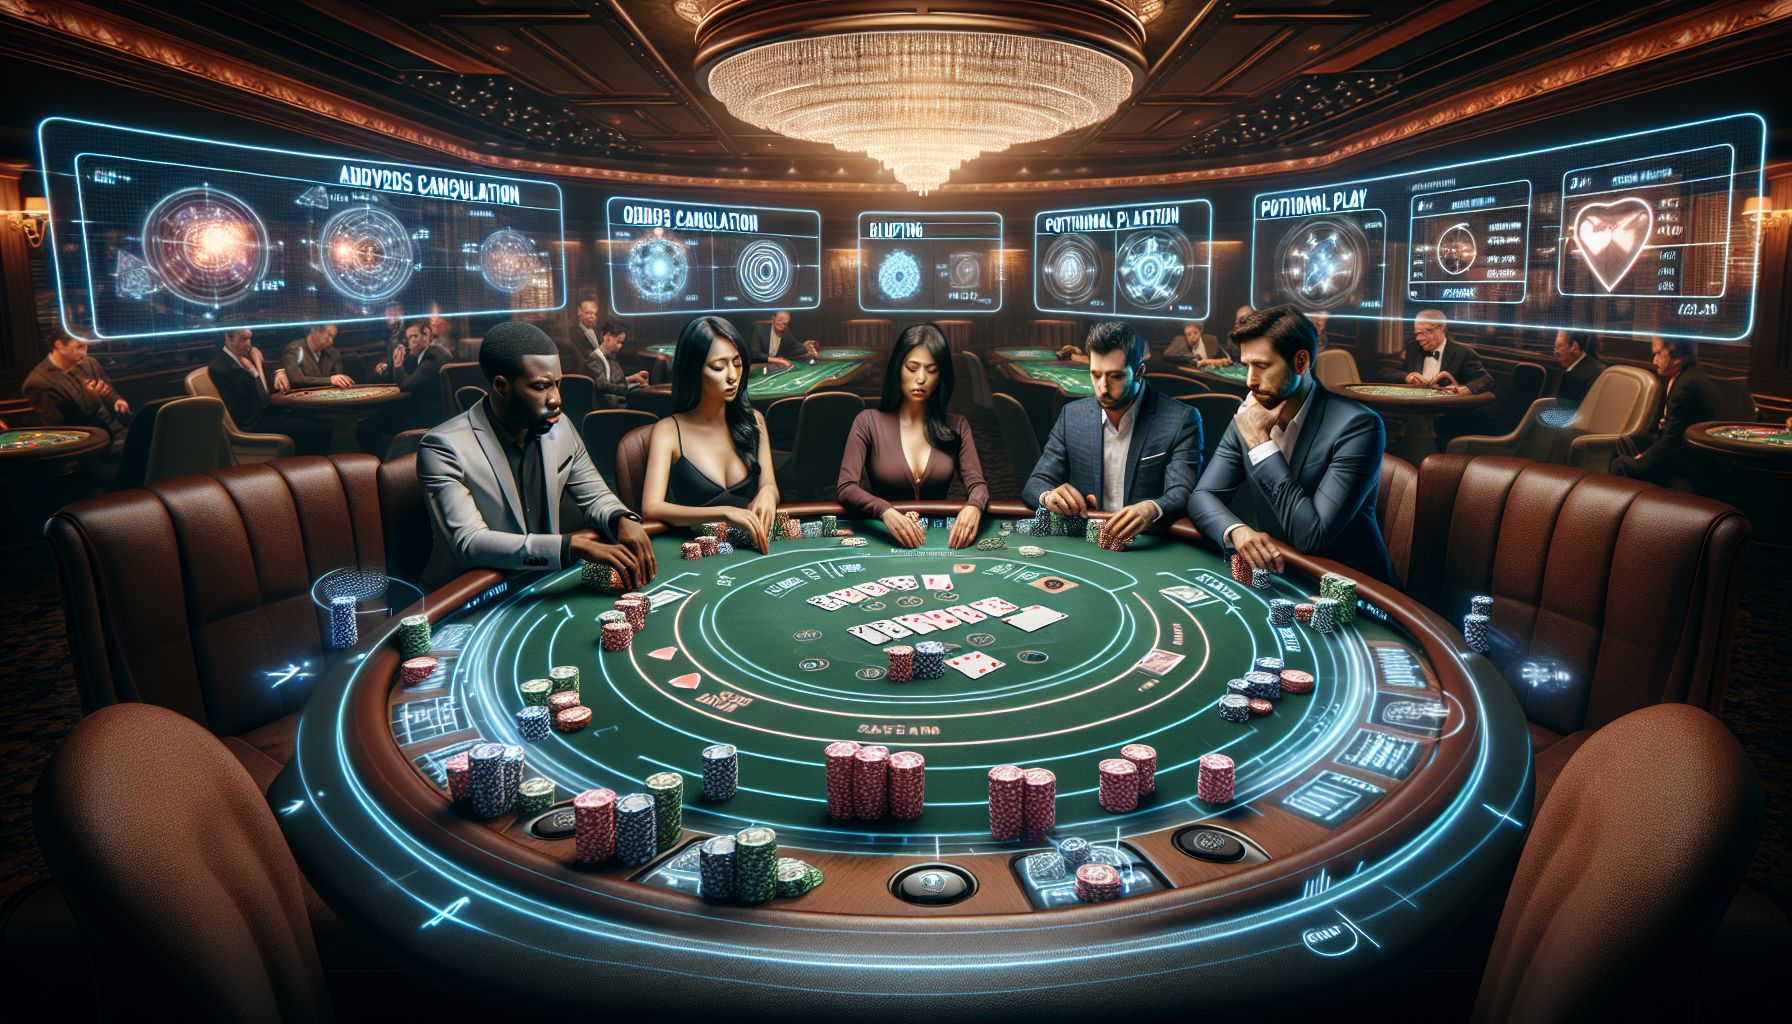 Advanced Poker Strategies for the Casino Environment